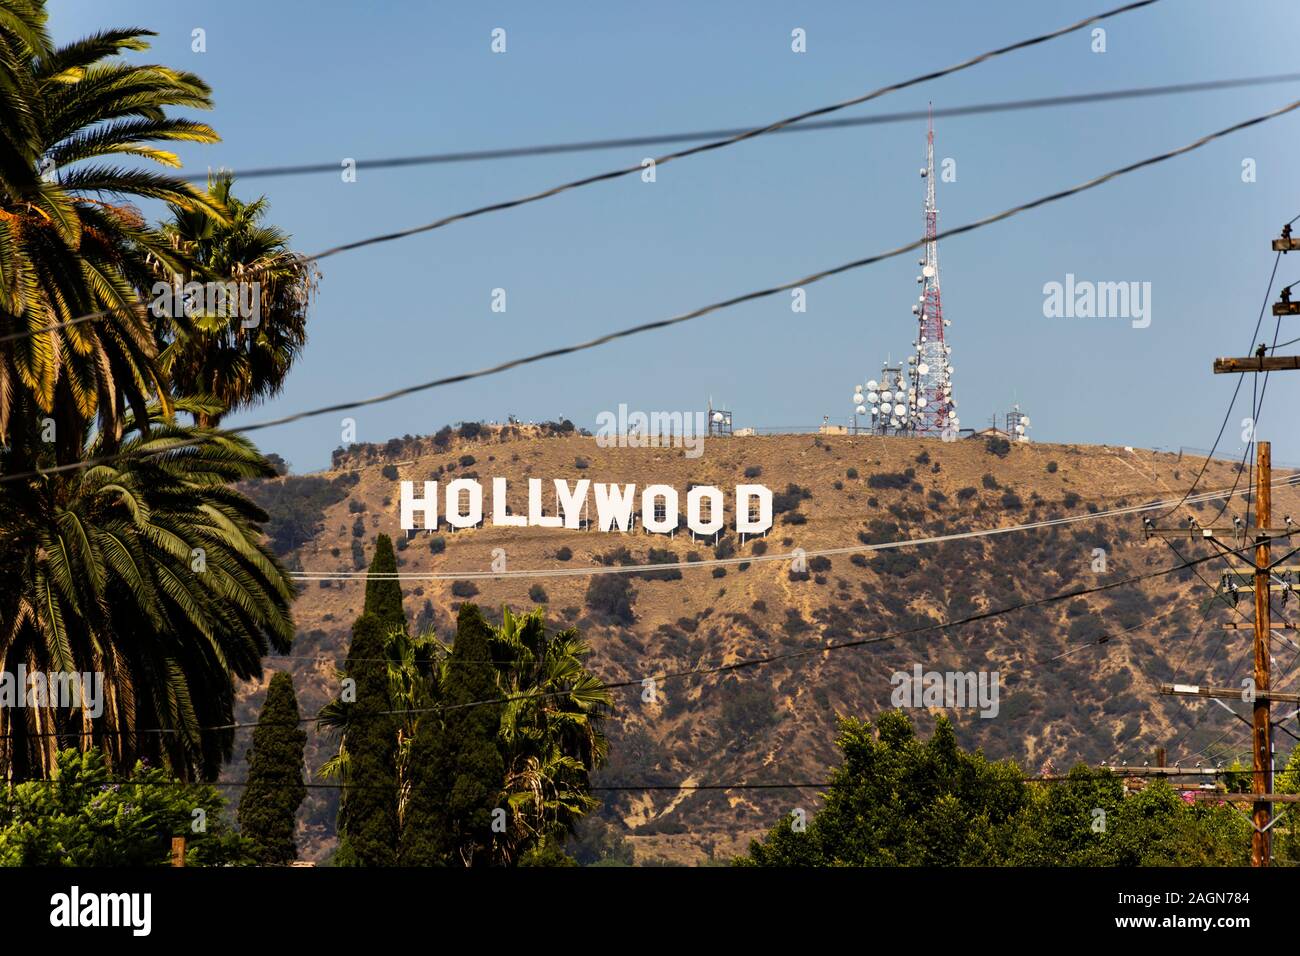 Hollywood-Schild und Kommunikationstürme, Hollywood Los Angeles, Kalifornien, USA Stockfoto